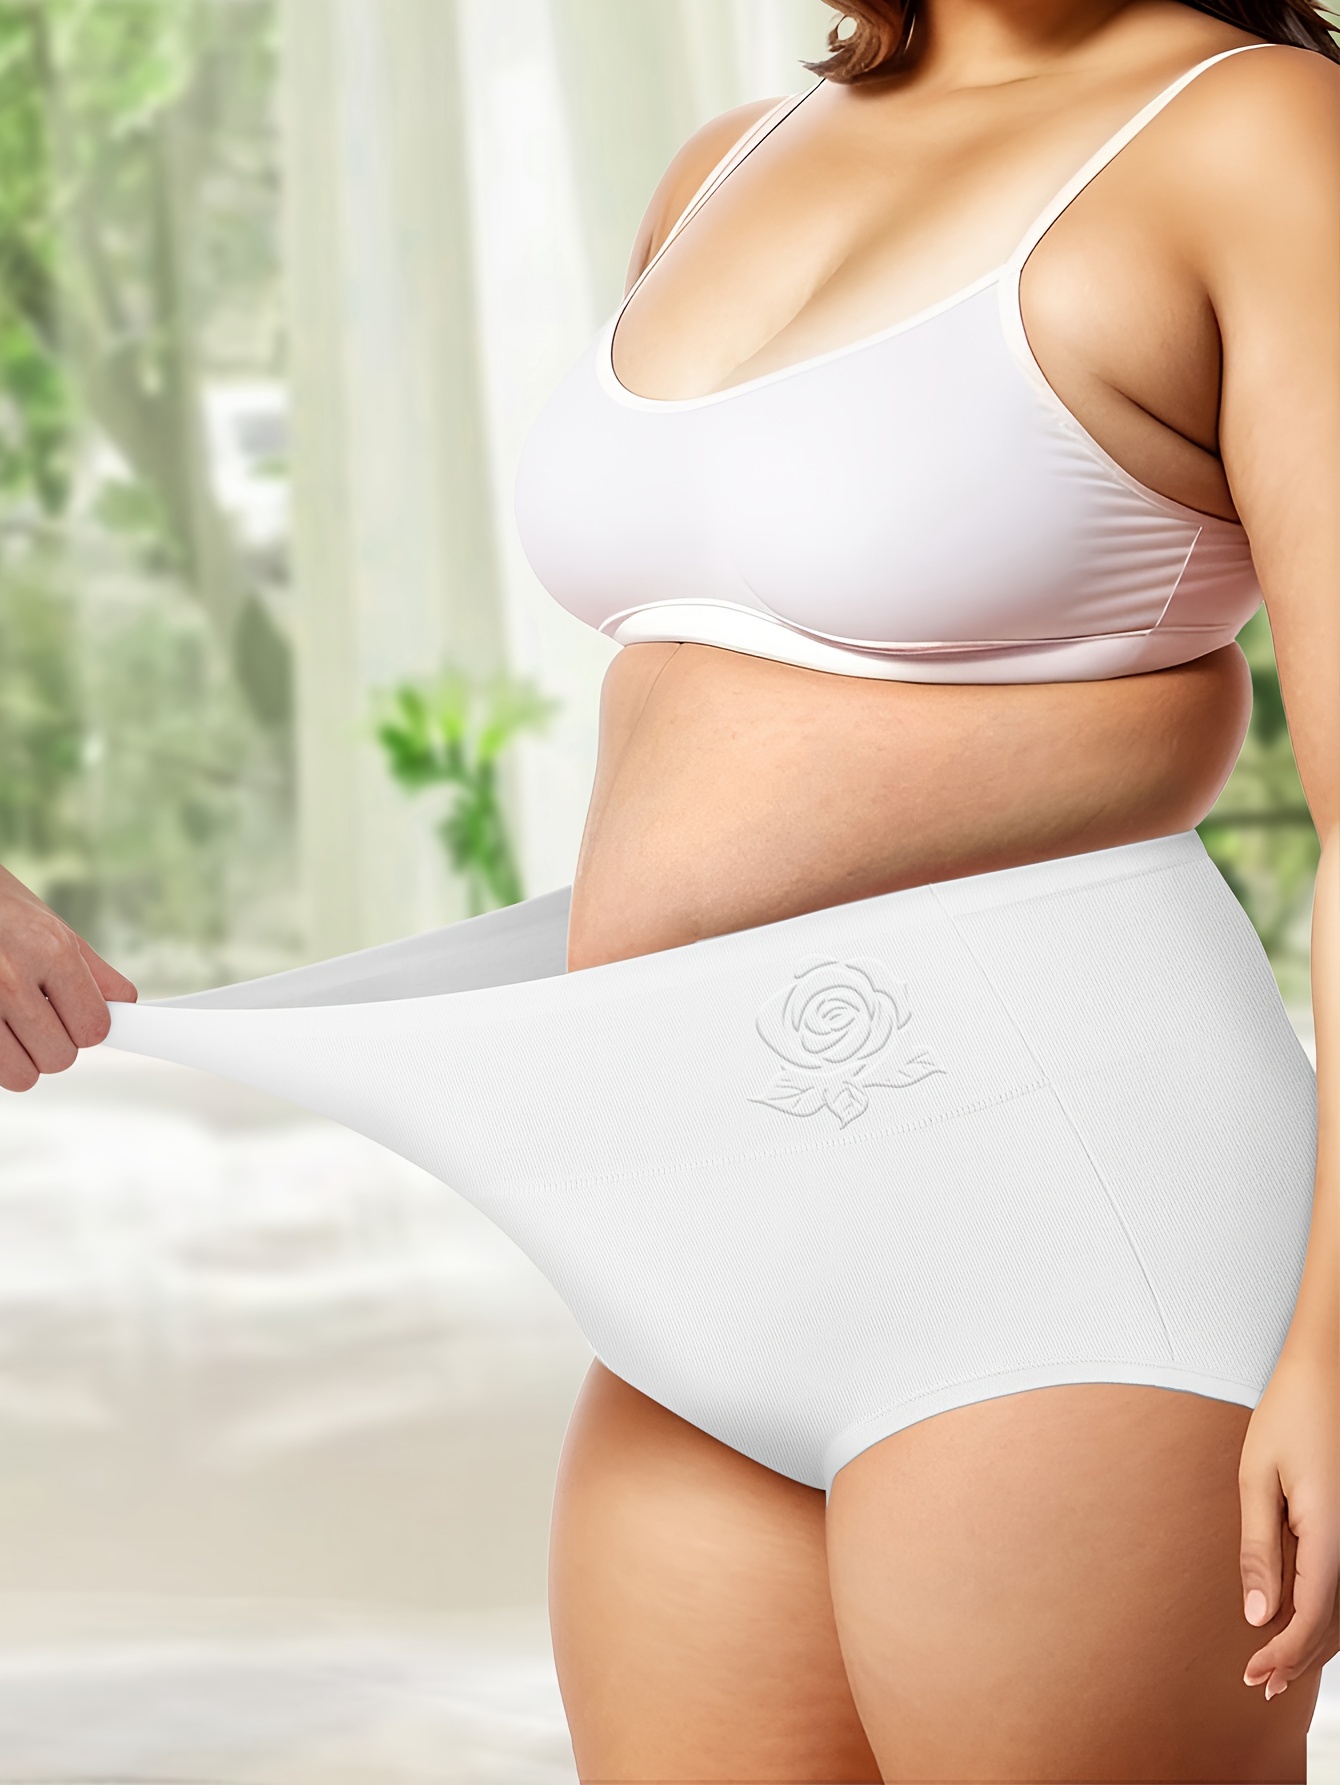 Cotton women's panties elastic soft large size XXXL Embossed ROSE